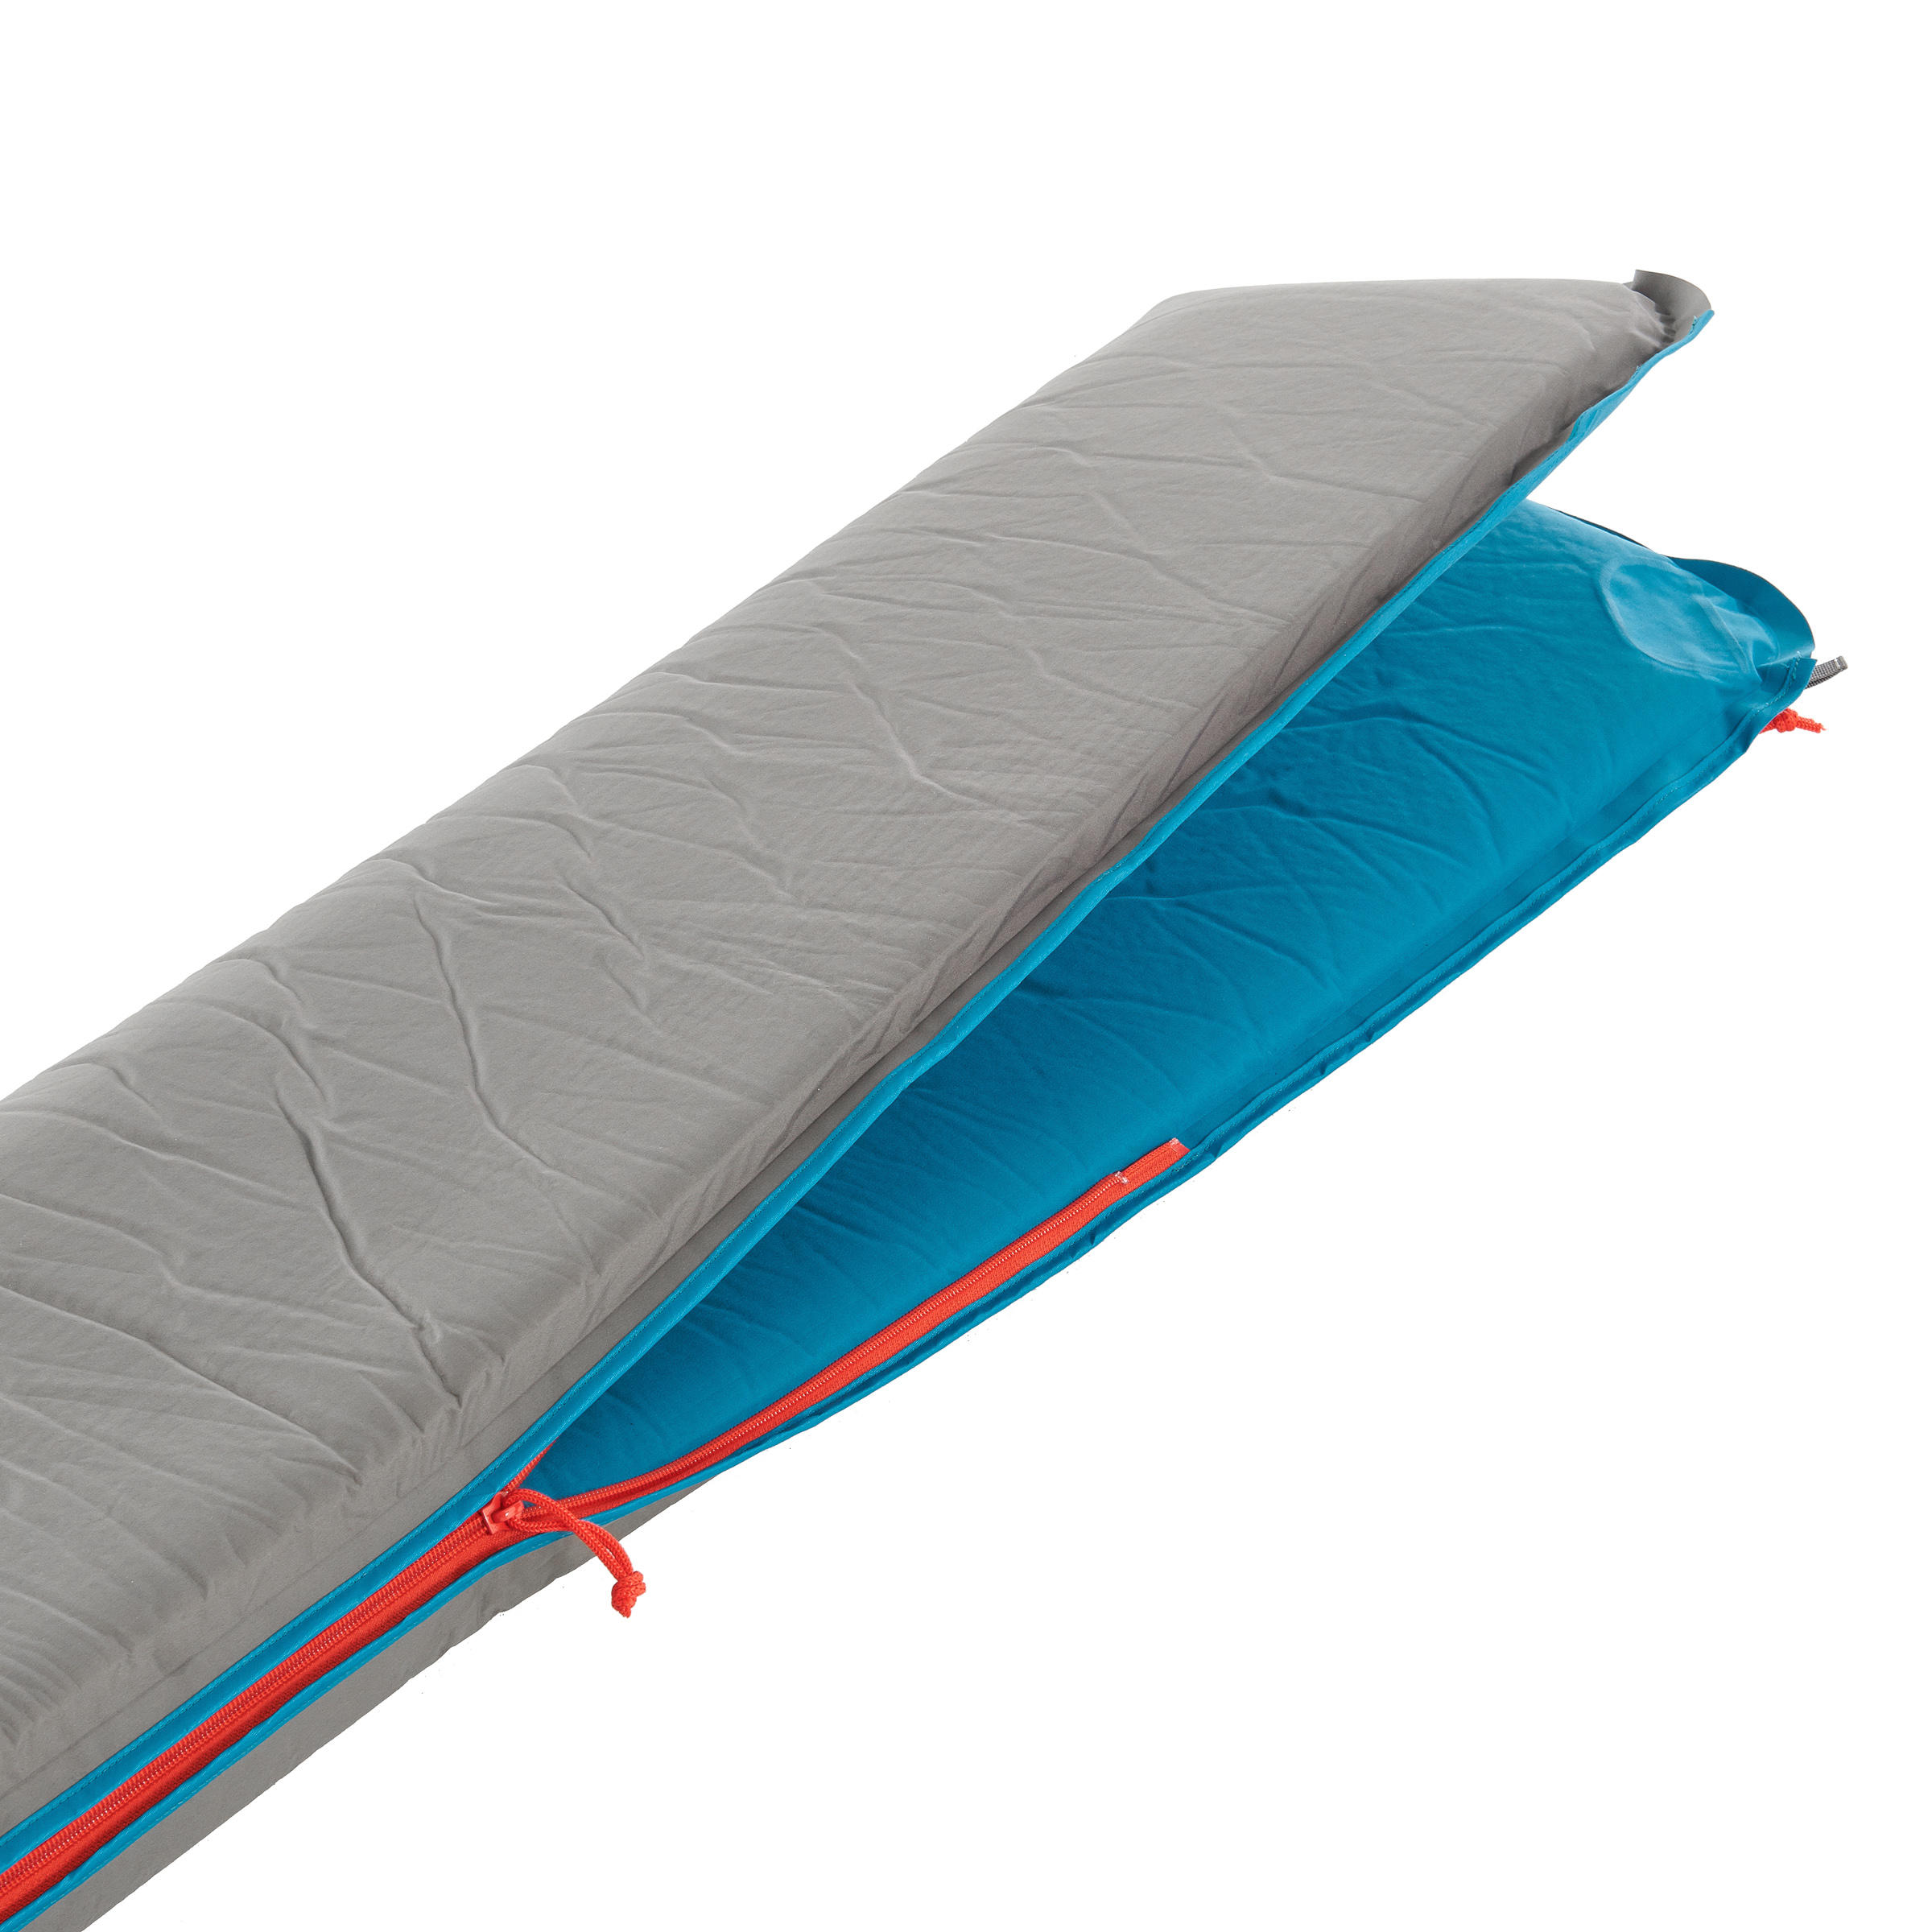 decathlon self inflating mattress review